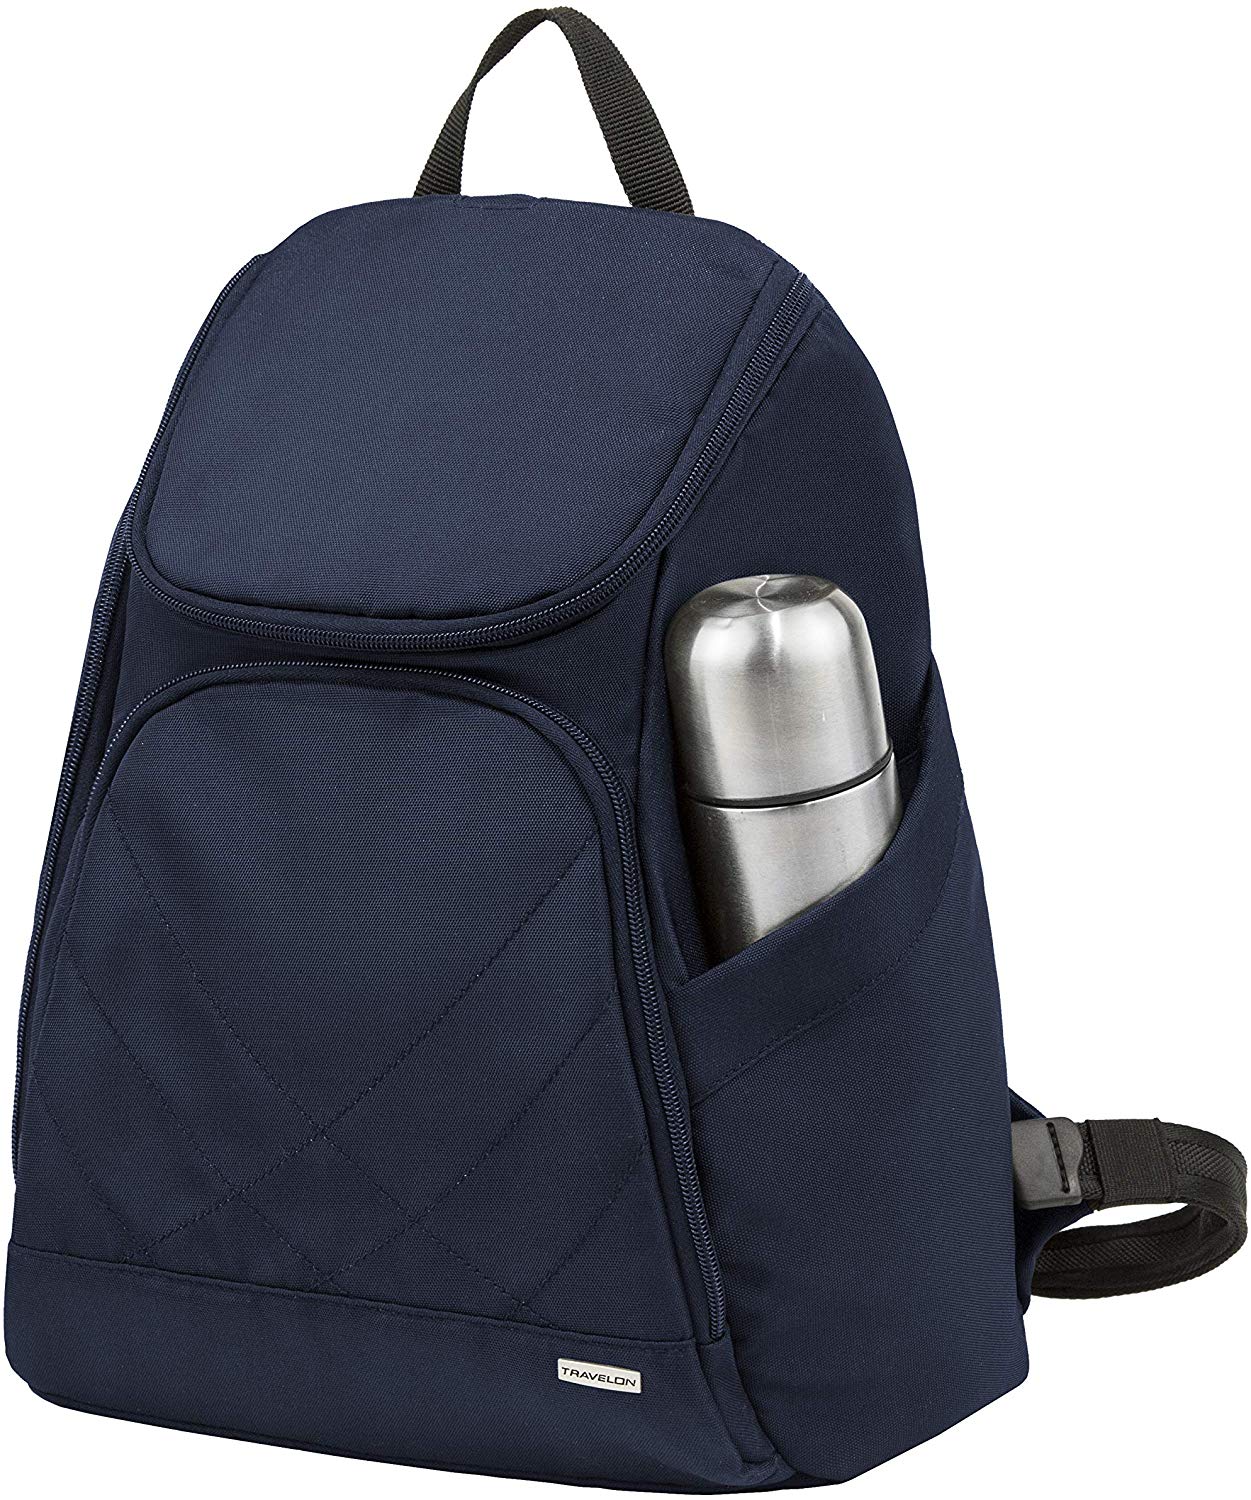 travelon anti theft urban backpack